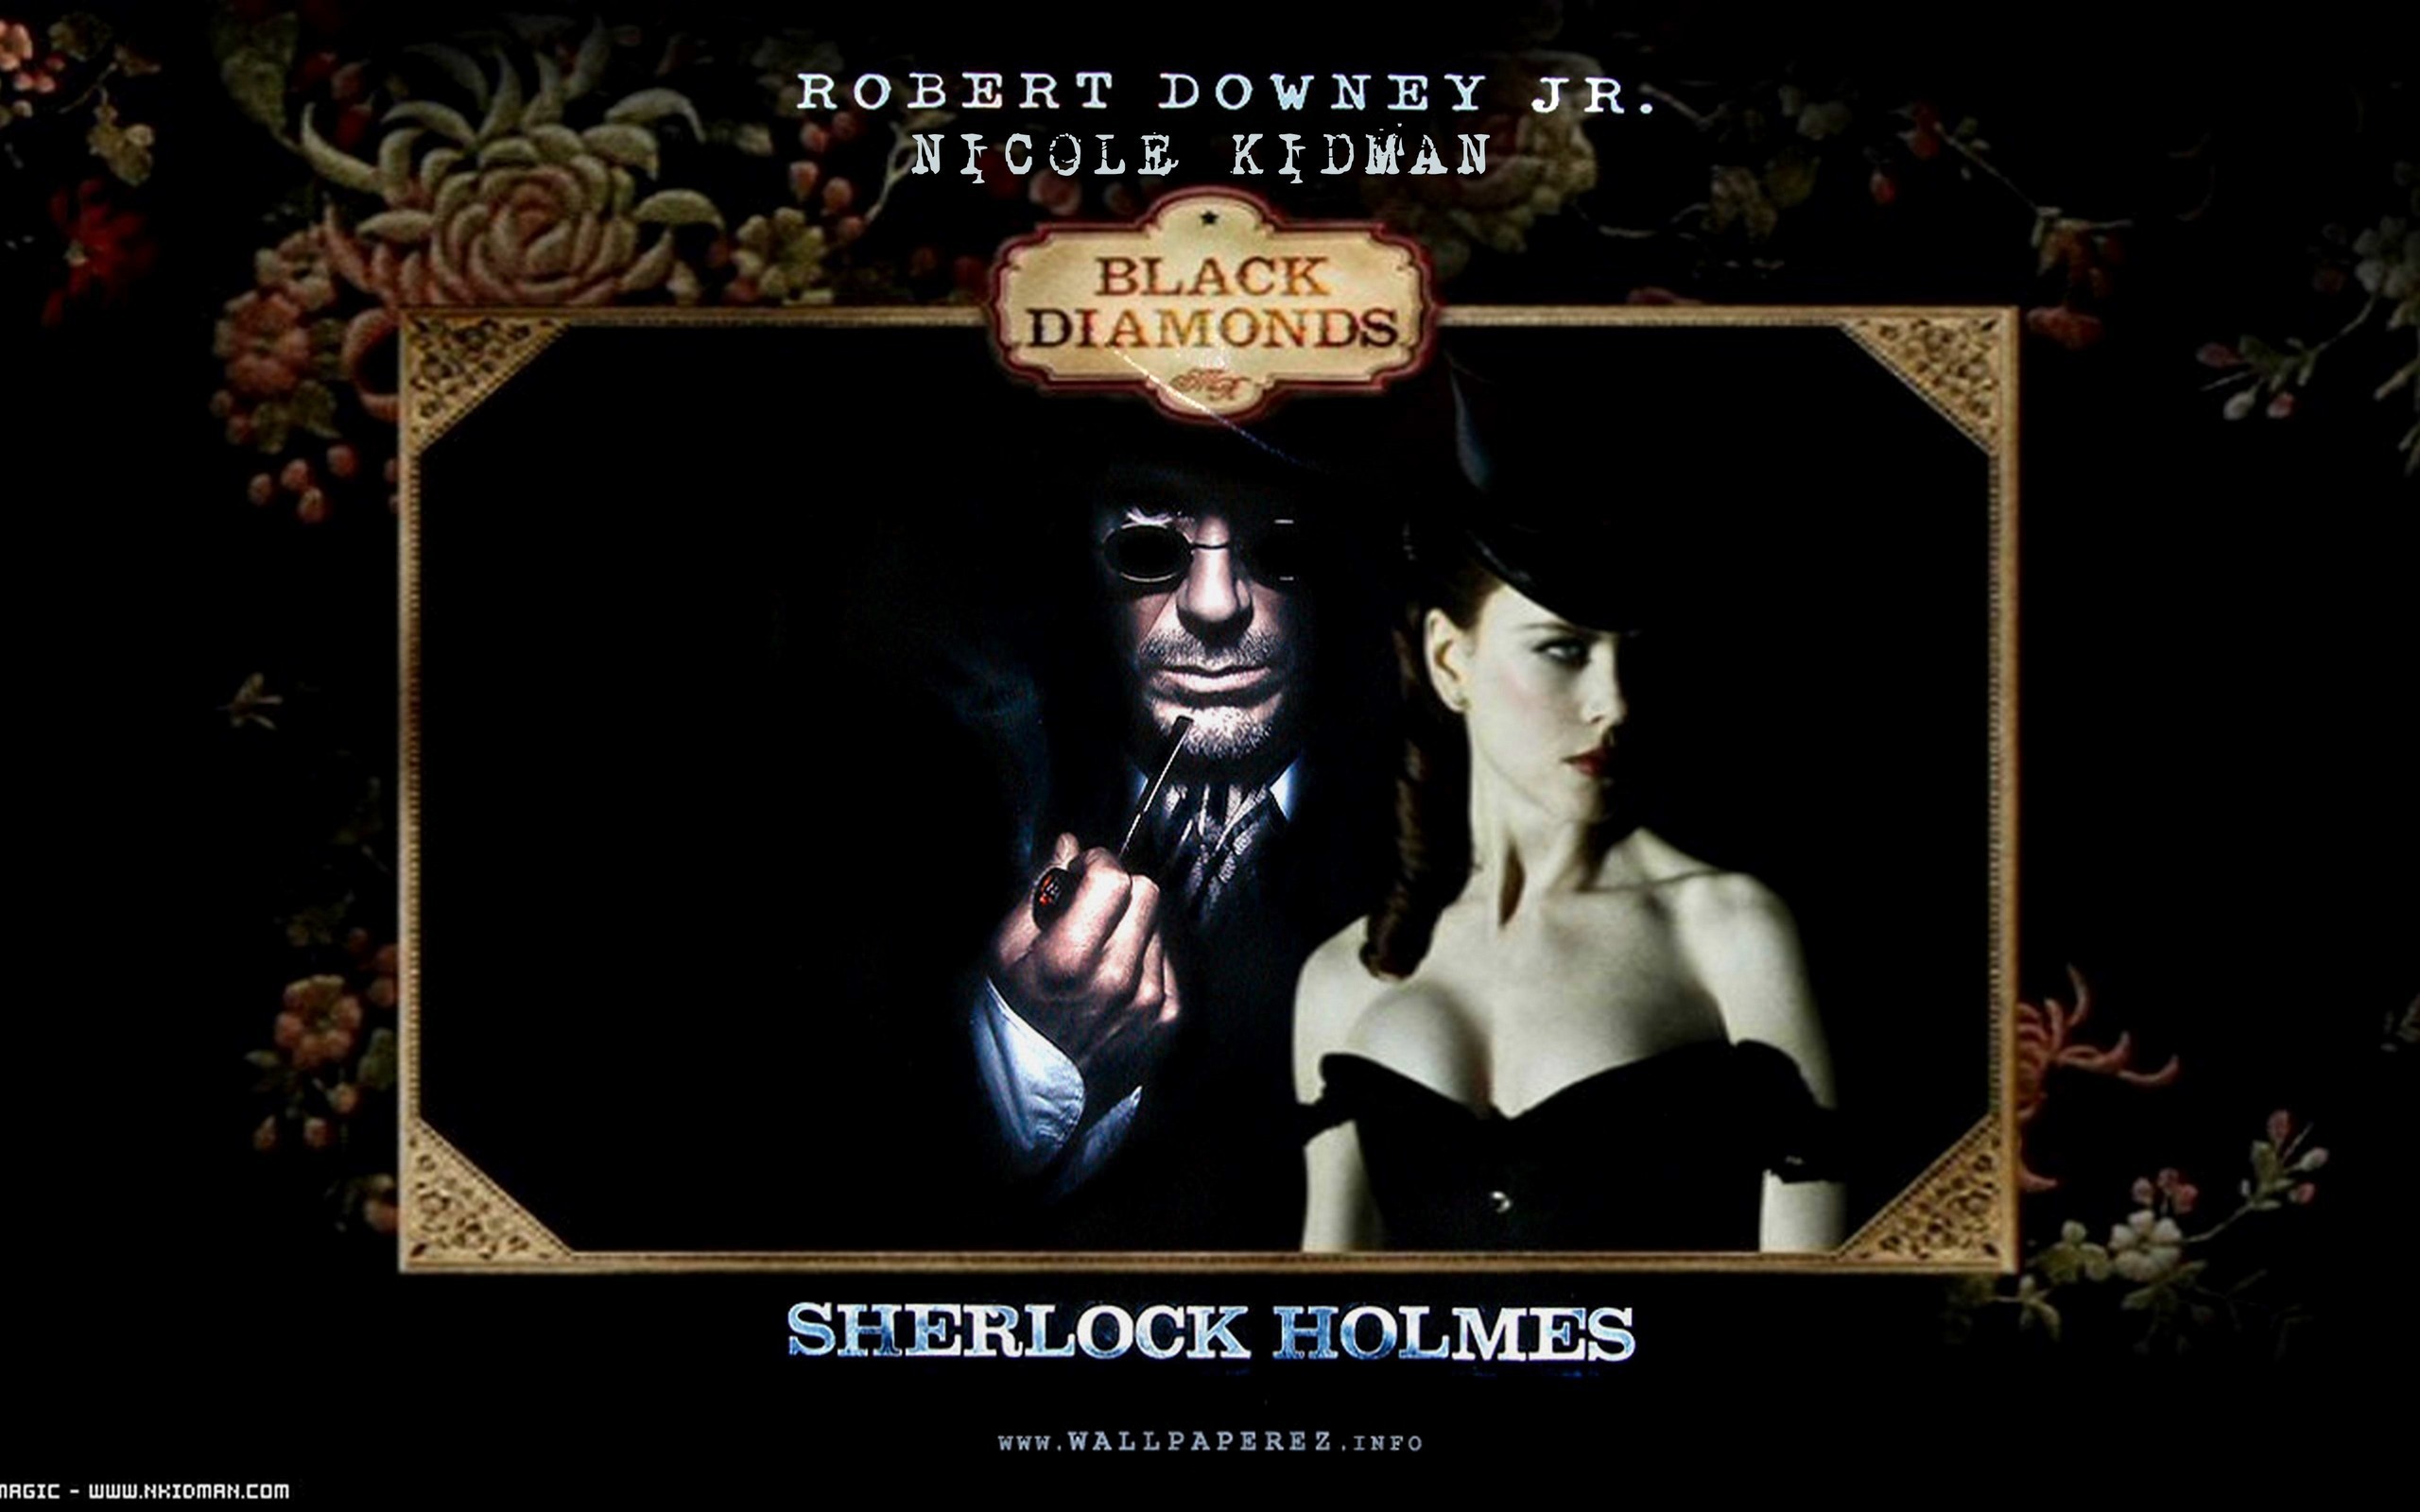 2560x1600 Robert Downey Jr. as Sherlock Holmes images Sherlock Holmes: Black Diamonds  HD wallpaper and background photos